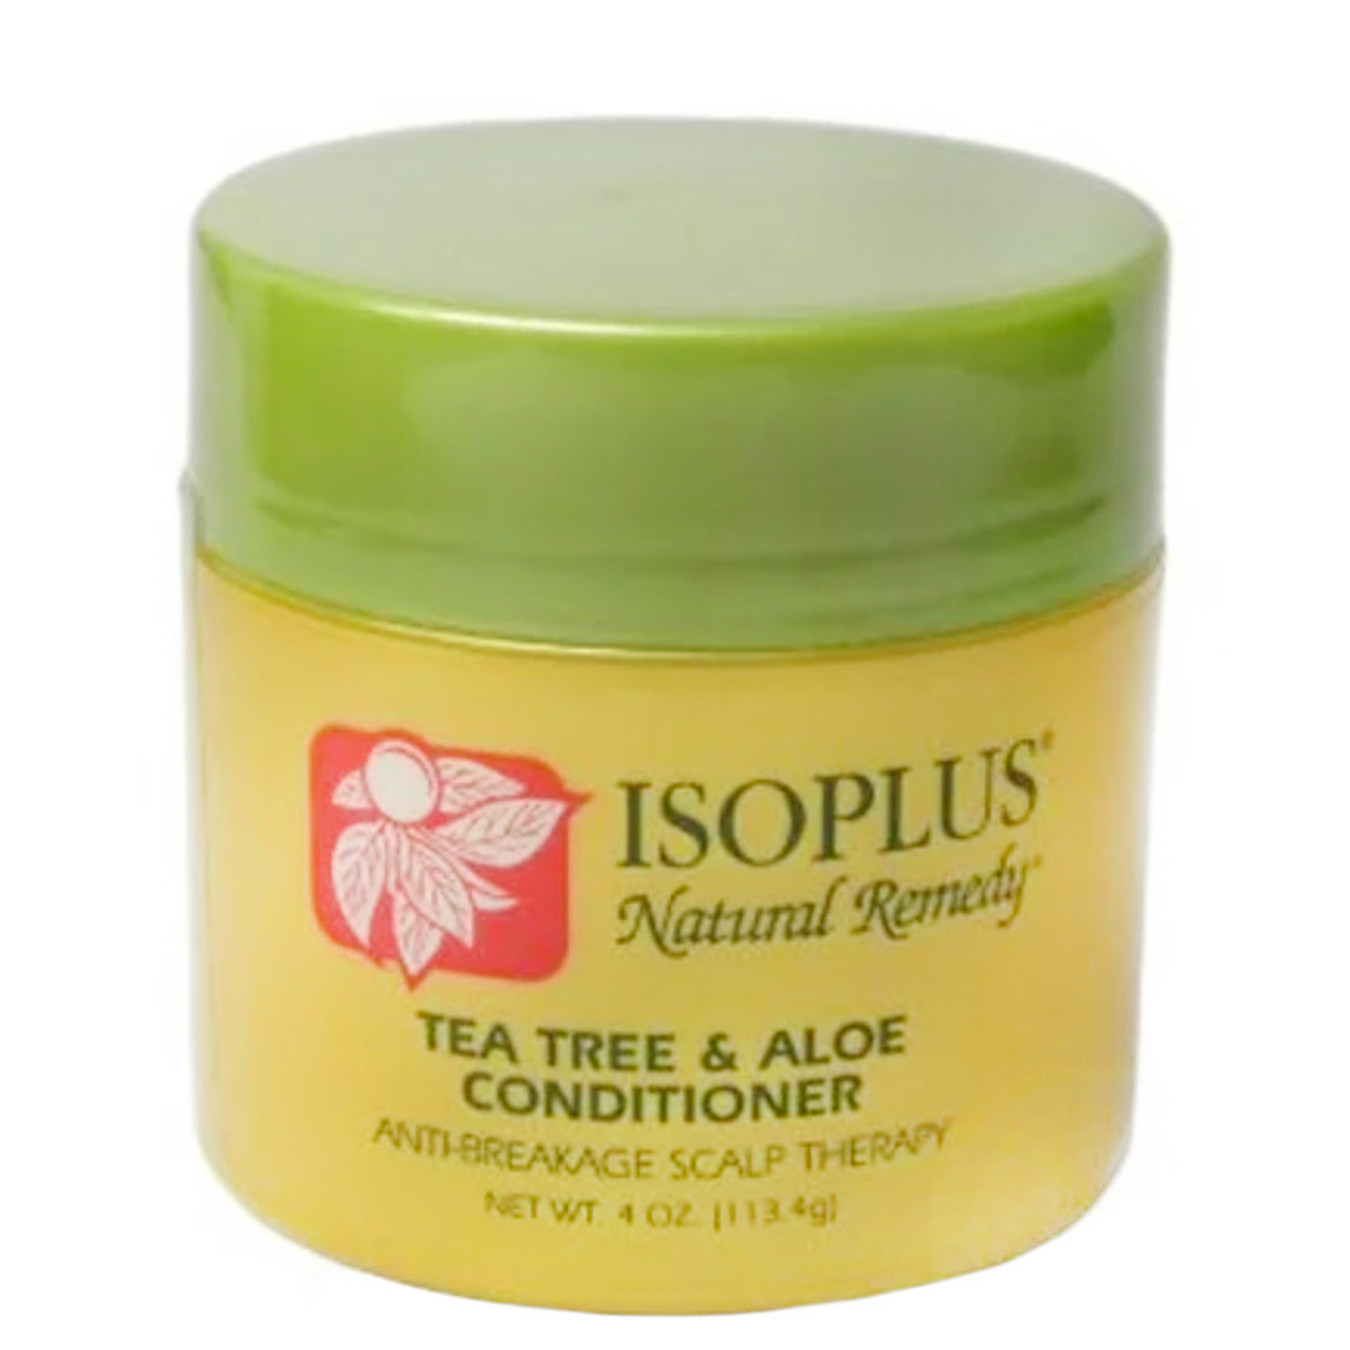 ISOPLUS Natural Remedy Tea Tree Aloe Conditioner (4 oz)